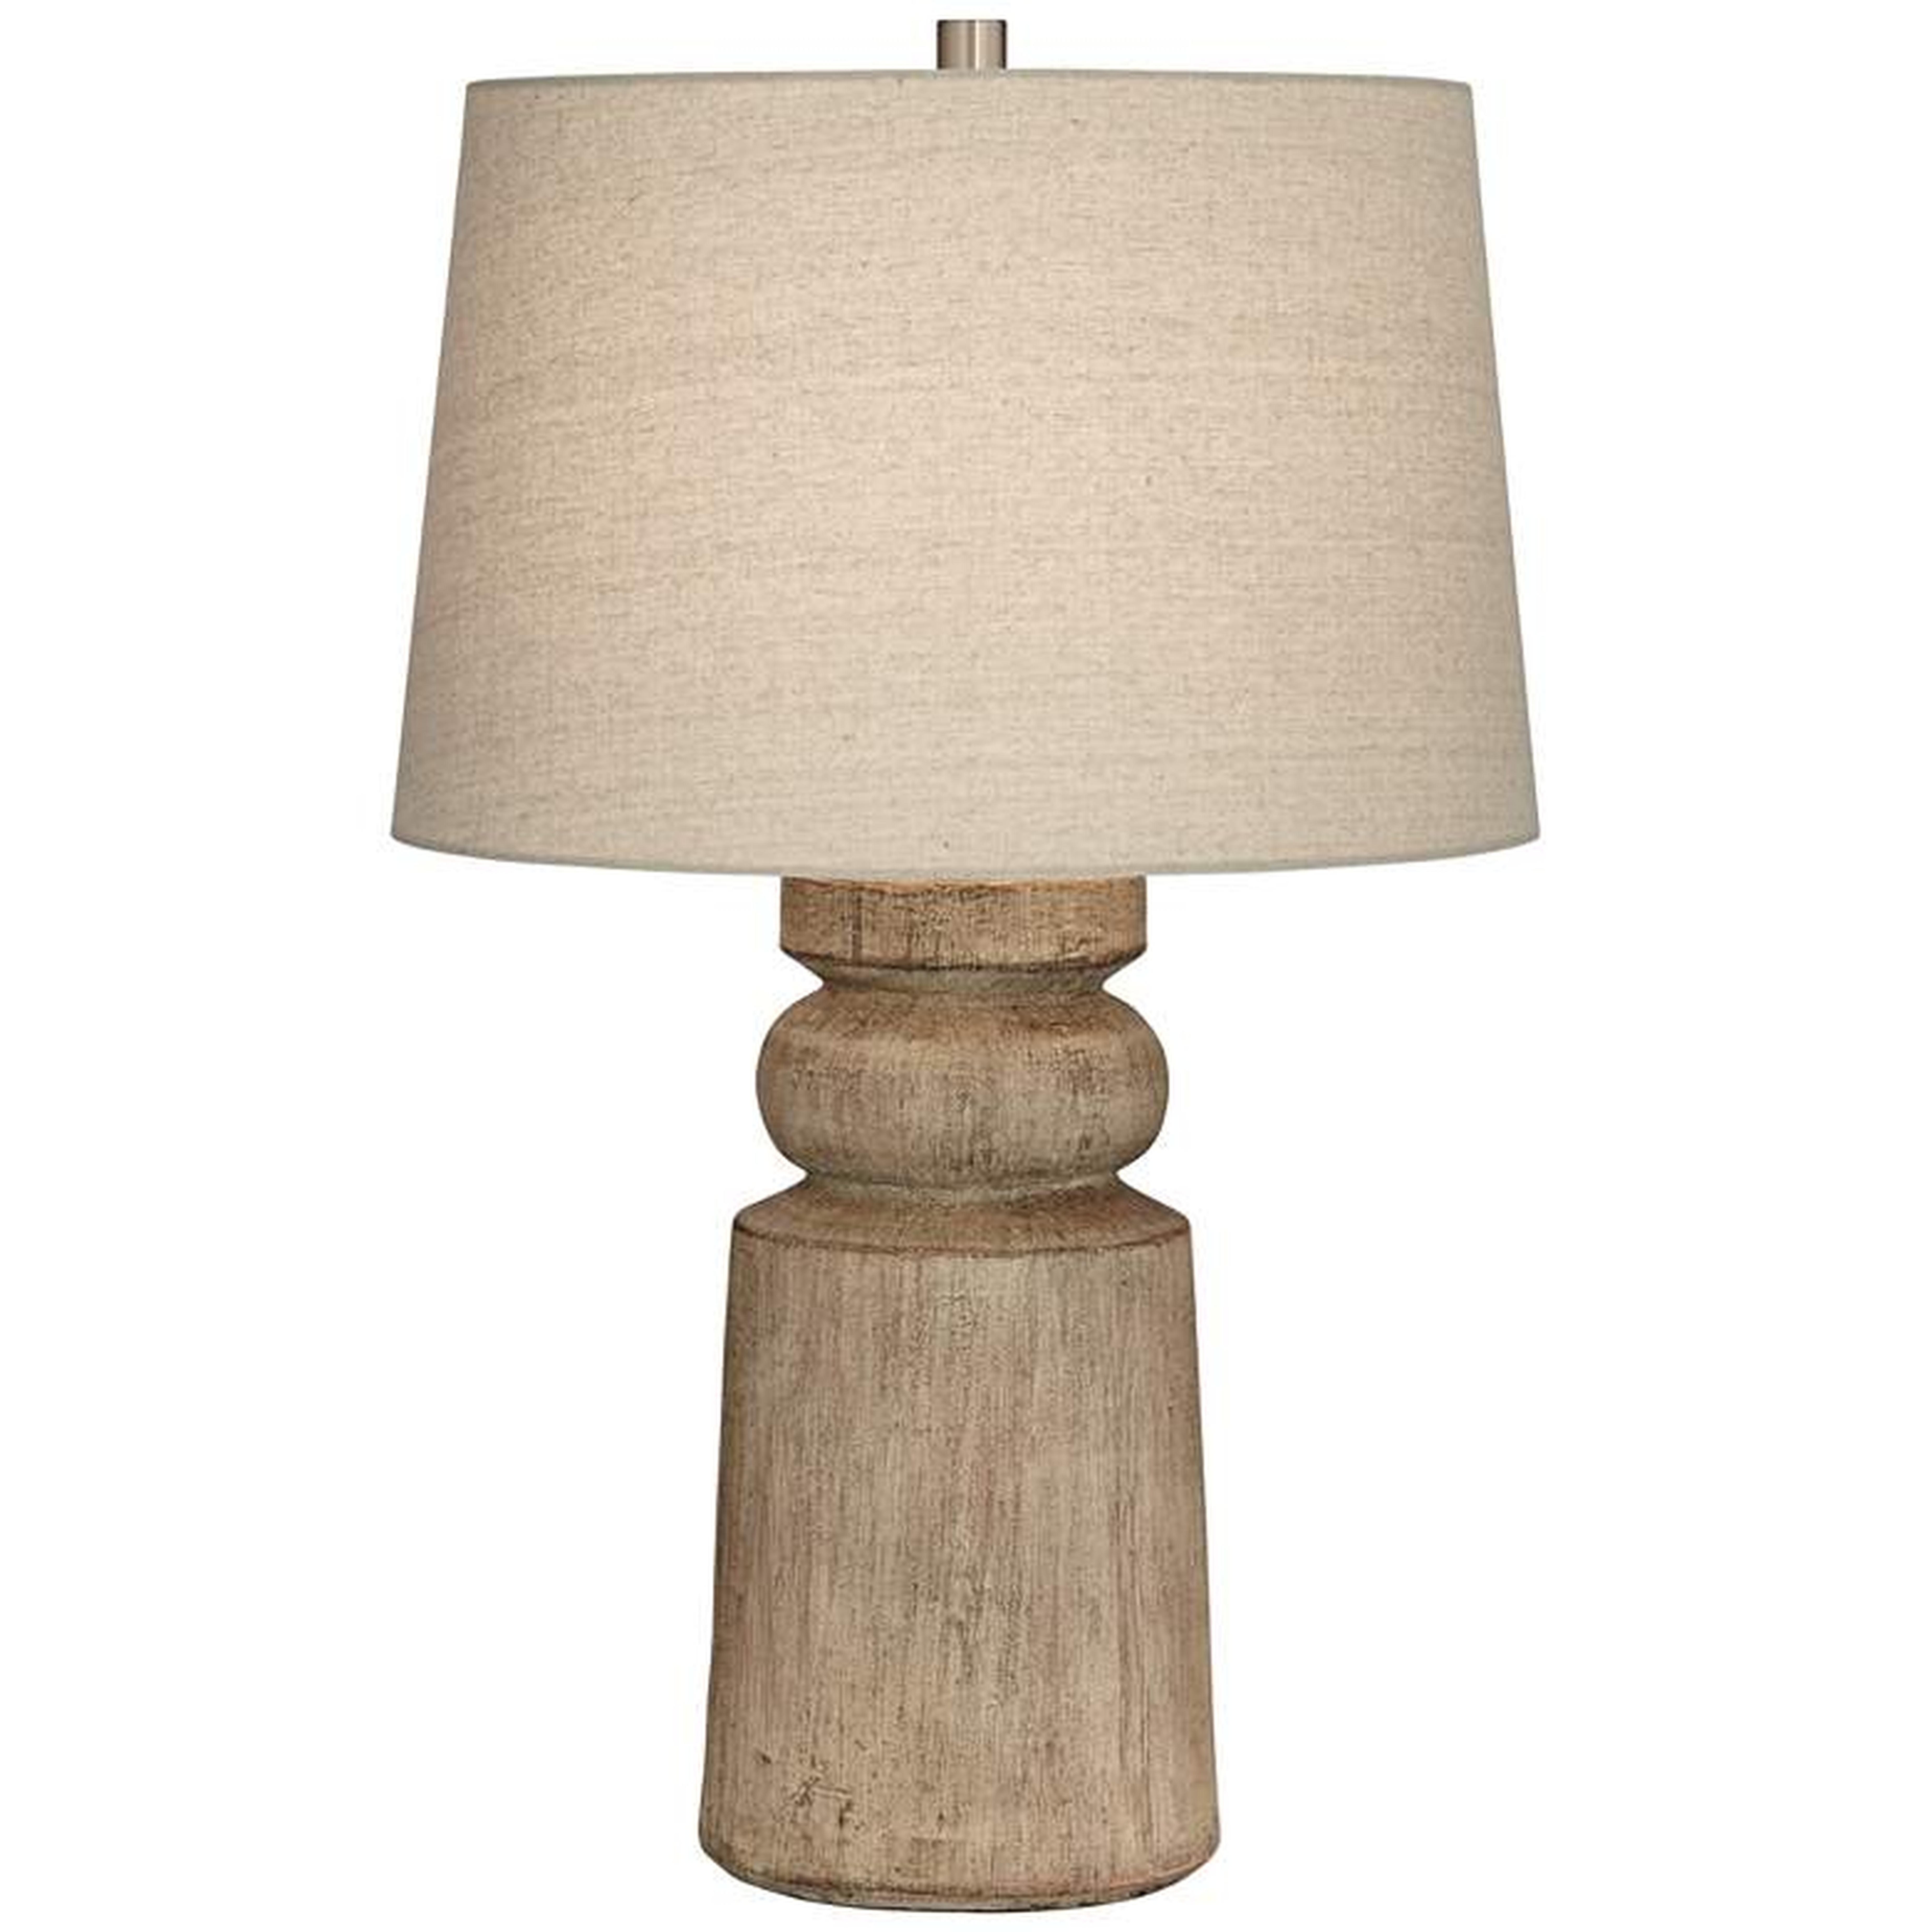 Totem Natural Faux Wood Table Lamp - Style # 66D53 - Lamps Plus